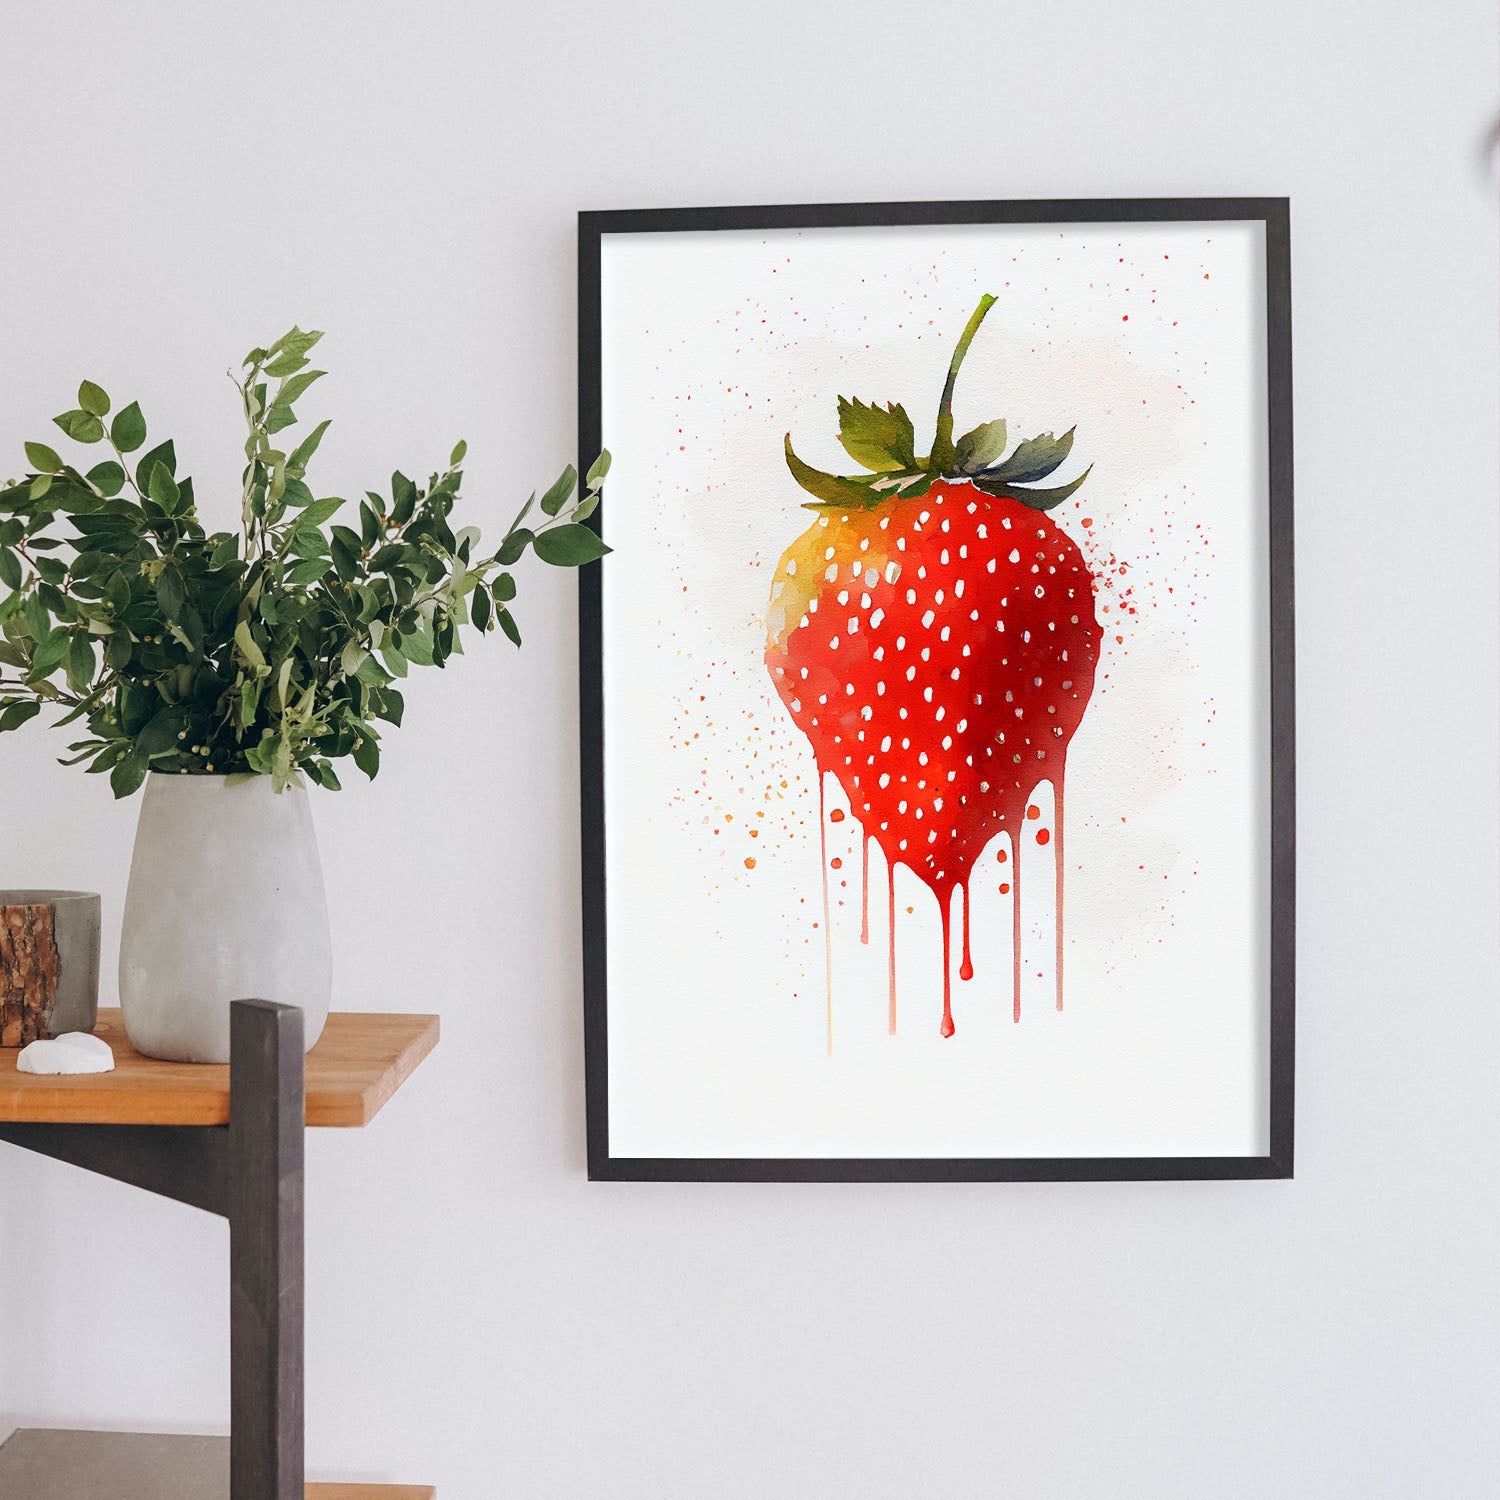 Nacnic minimalist Strawberry_2. Aesthetic Wall Art Prints for Bedroom or Living Room Design.-Artwork-Nacnic-A4-Sin Marco-Nacnic Estudio SL